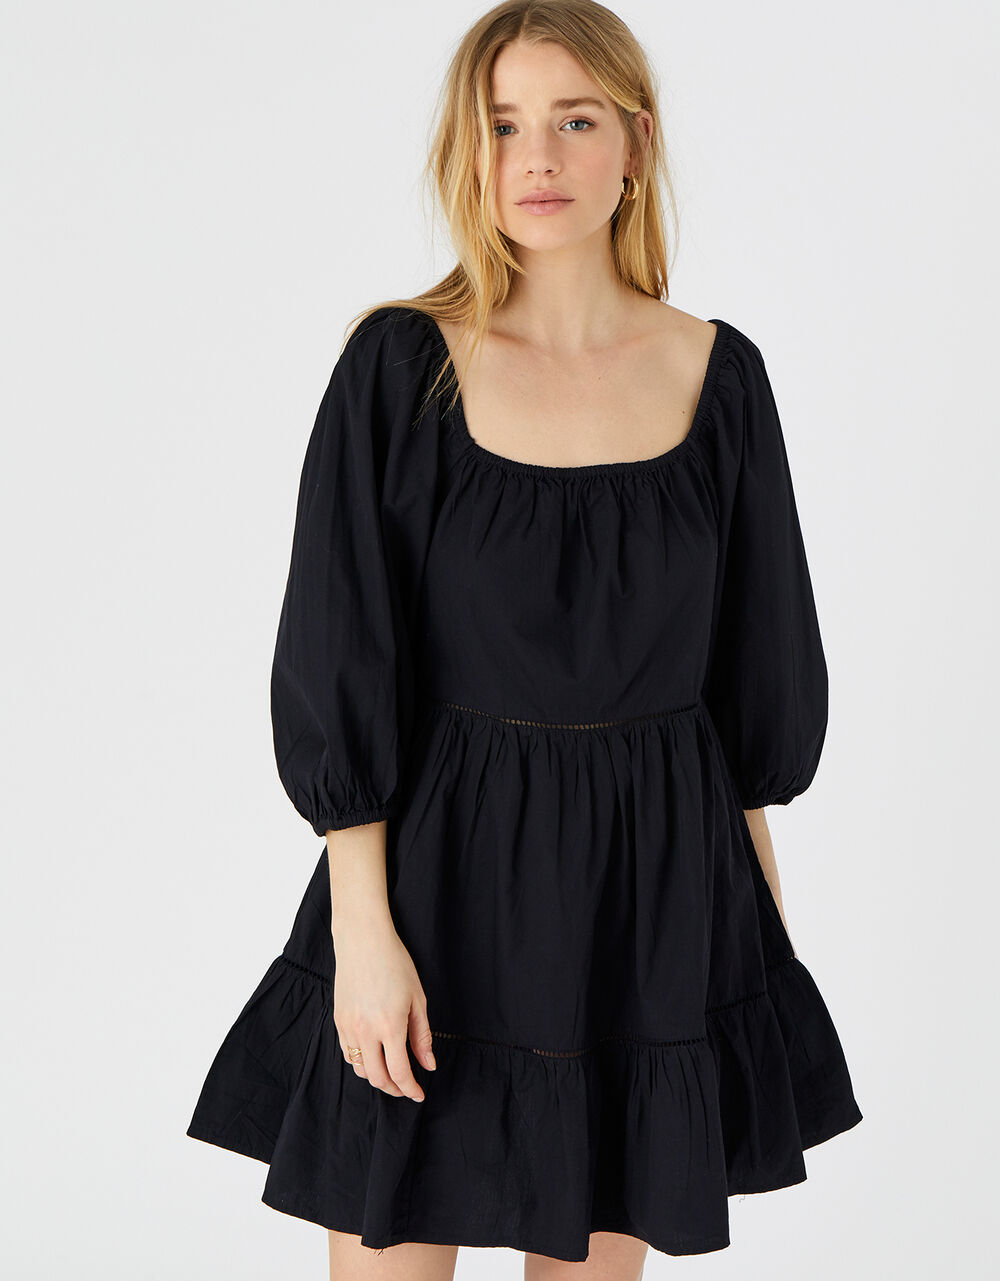 Puff Sleeve Dress in Organic Cotton Black | Beach holiday dresses ...